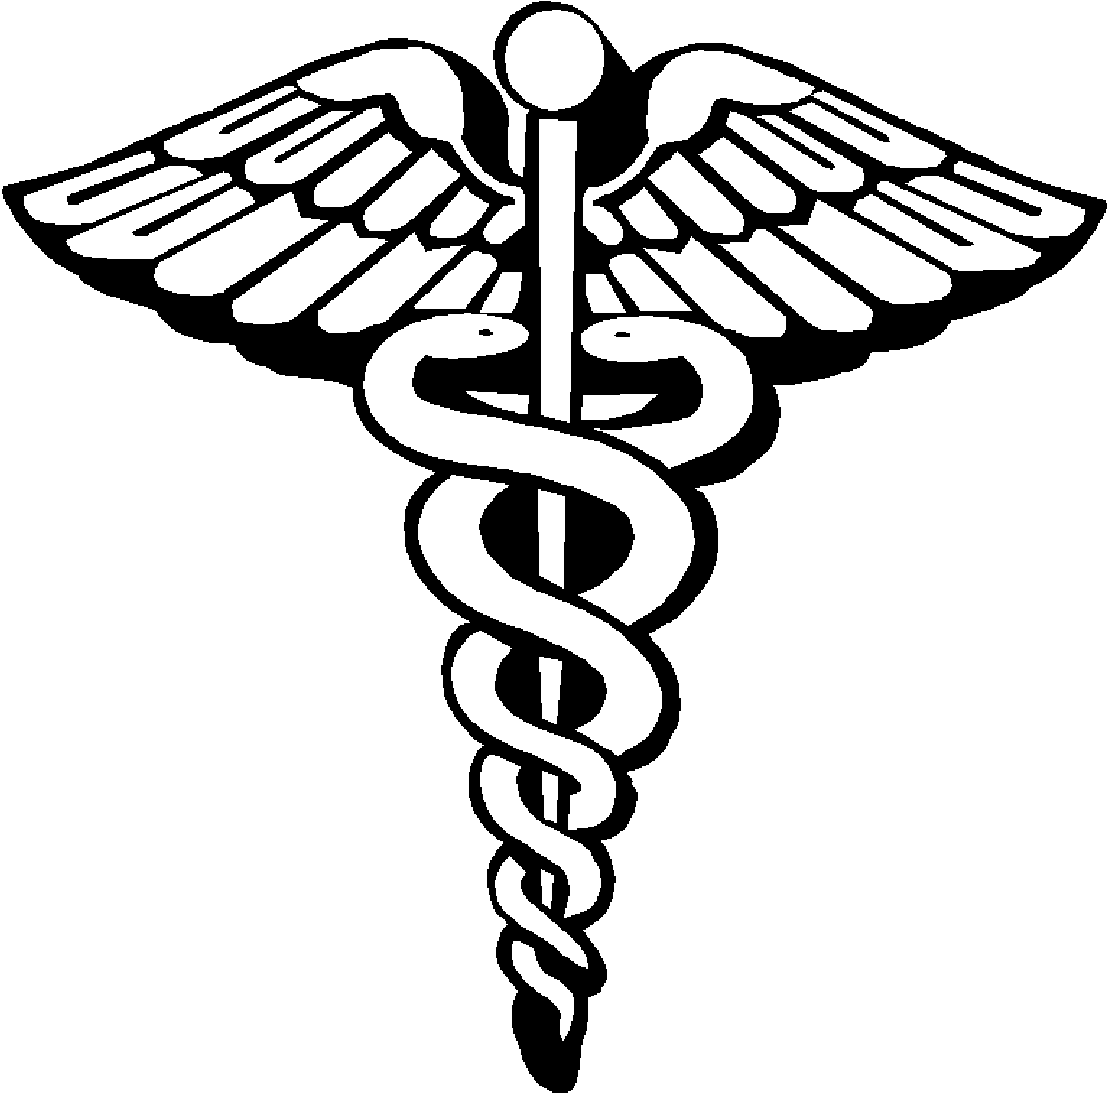 FREE Medical Symbol Caduceus Images - ClipArt Best